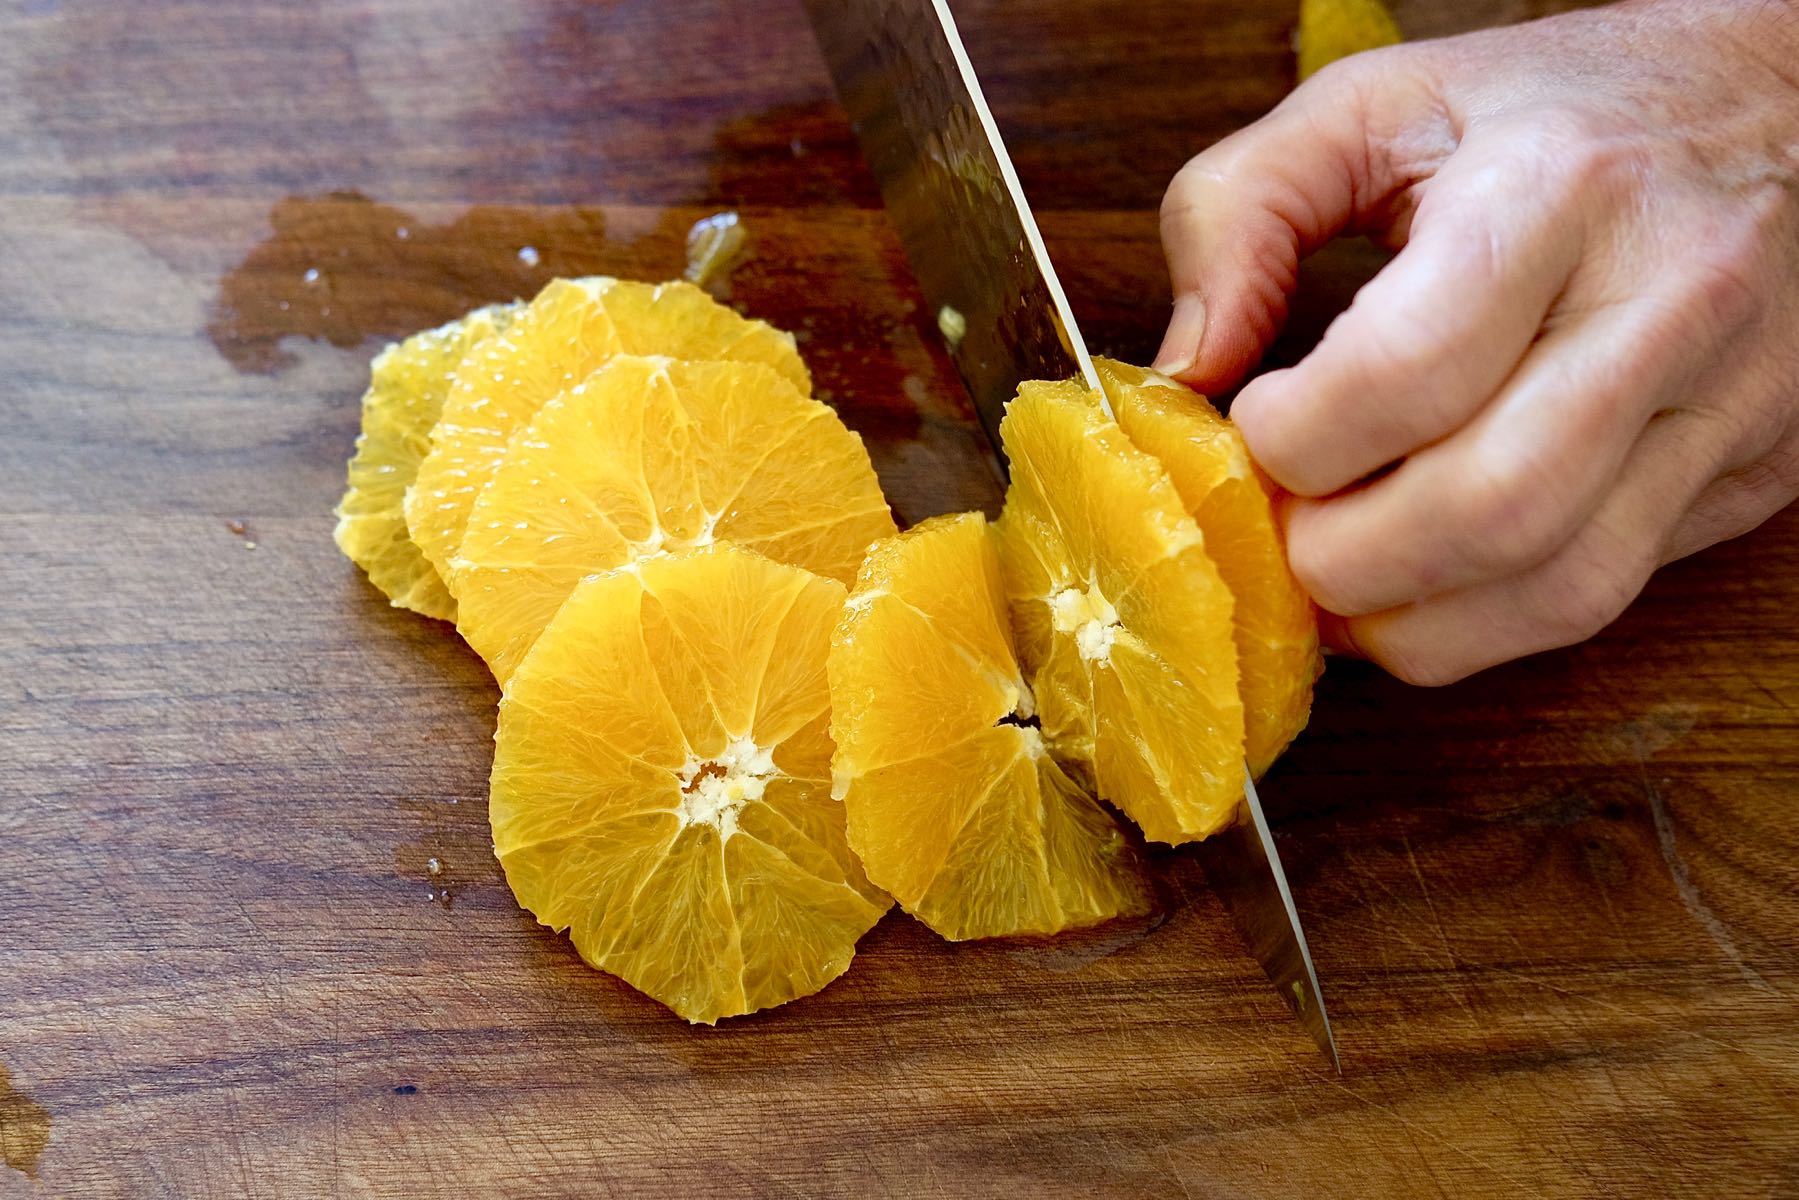 Slicing trimmed orange on cutting board.